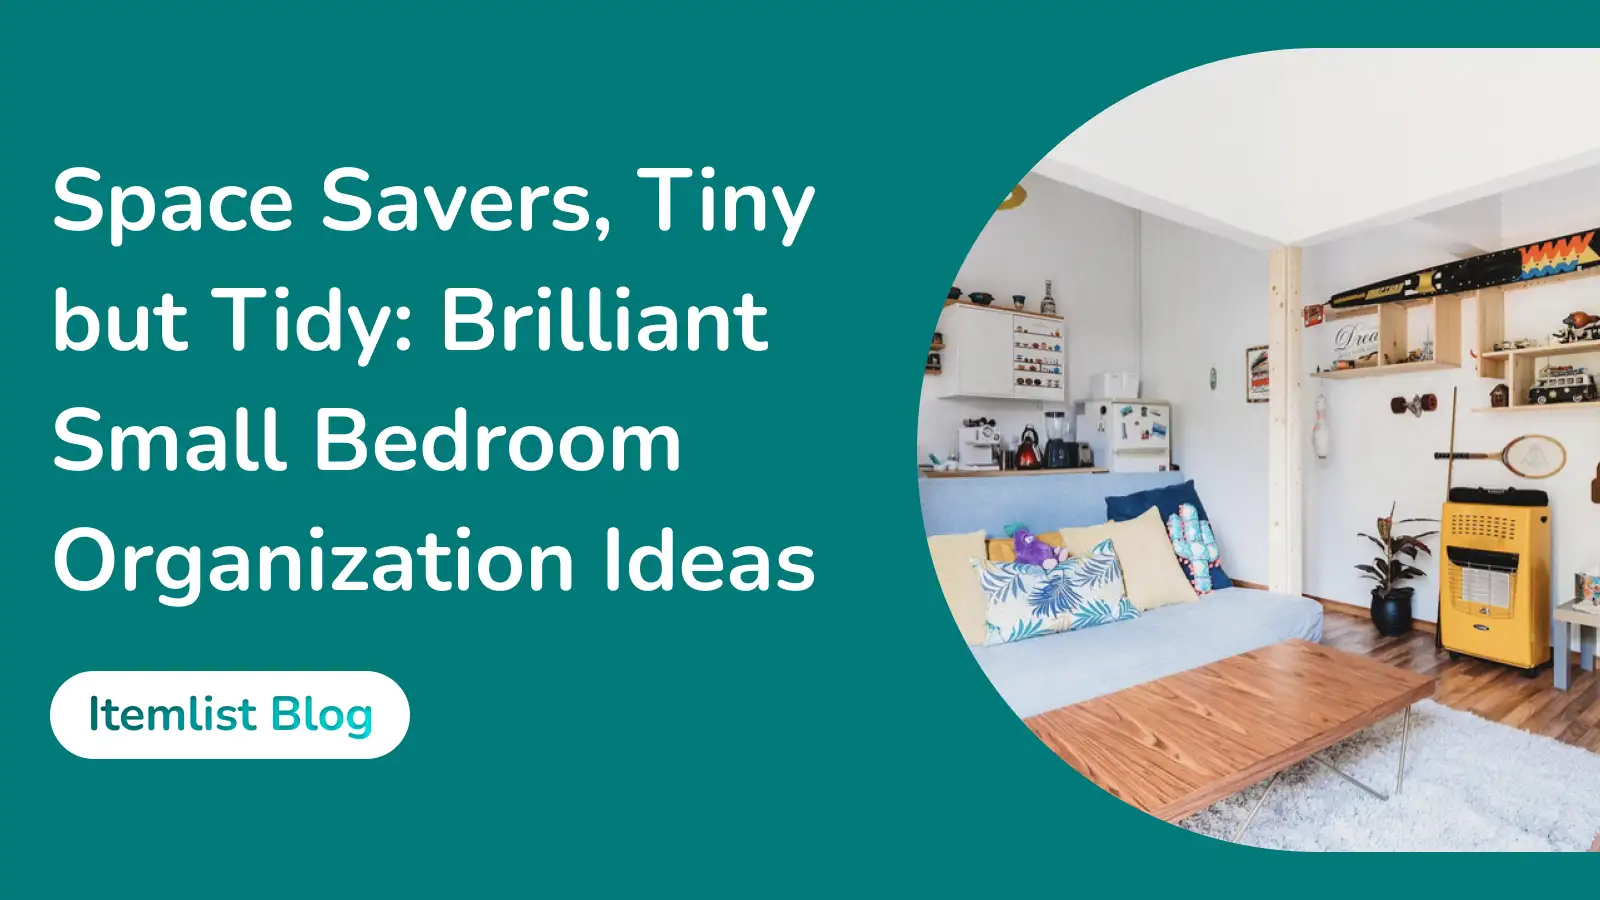 Space Savers, Tiny but Tidy] Brilliant Small Bedroom Organization Ideas